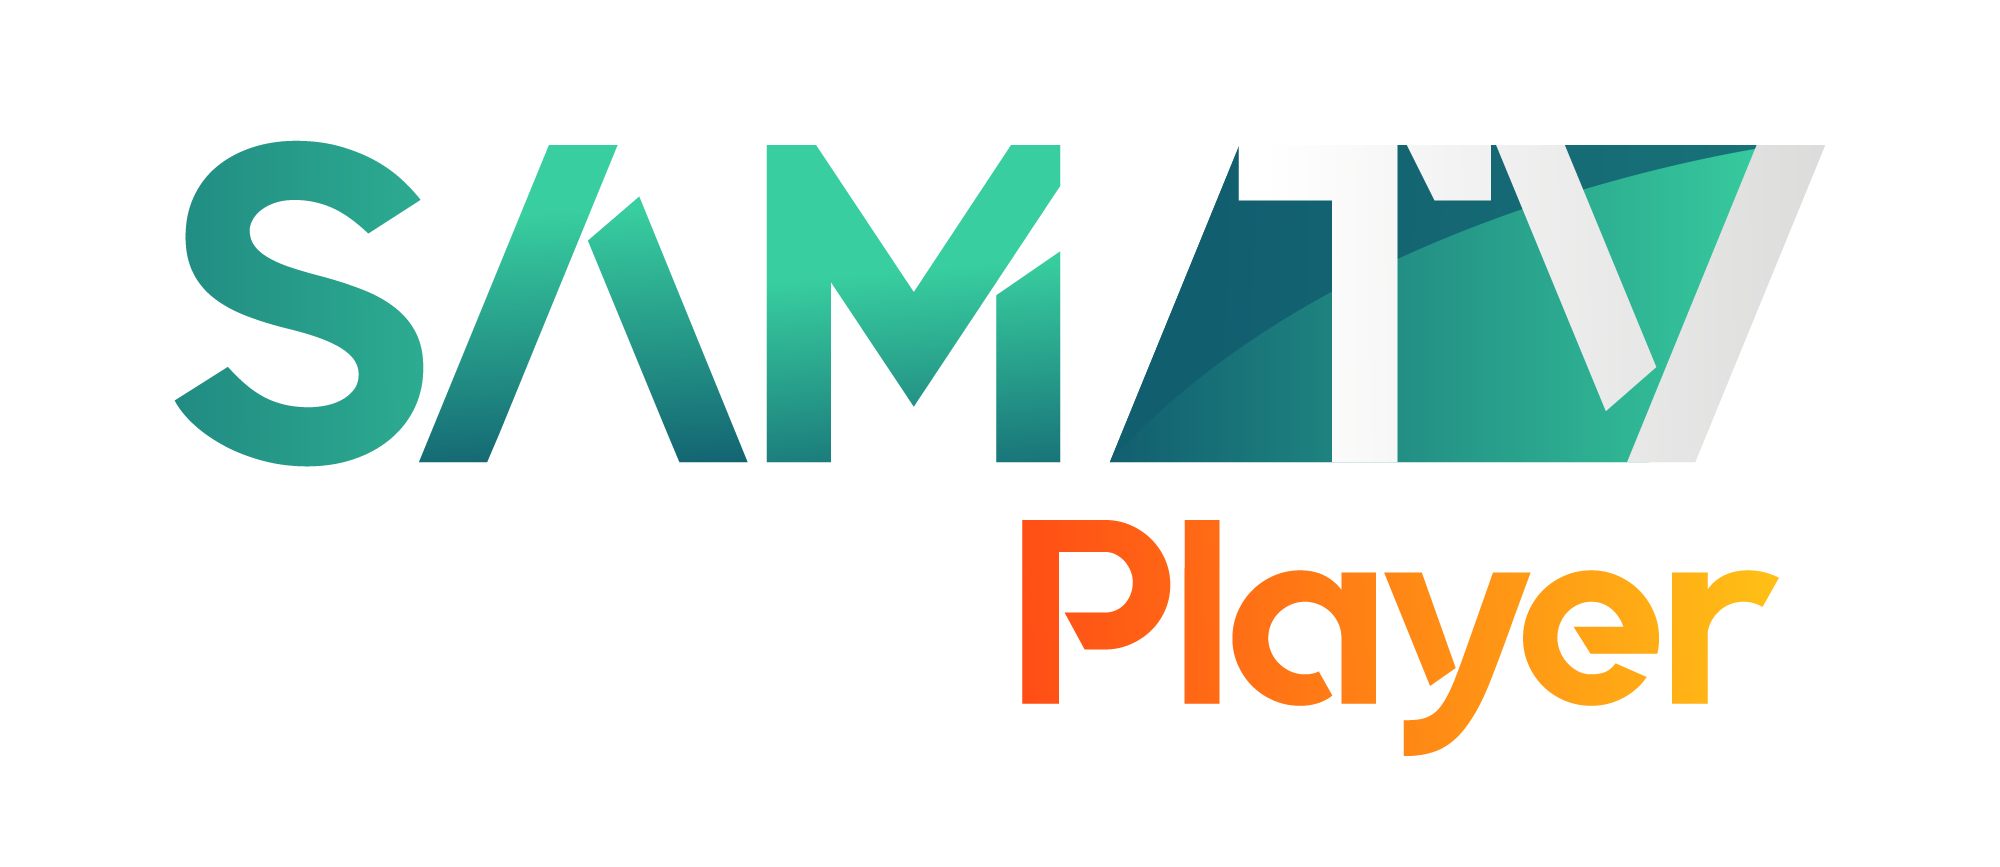 SamTv Player